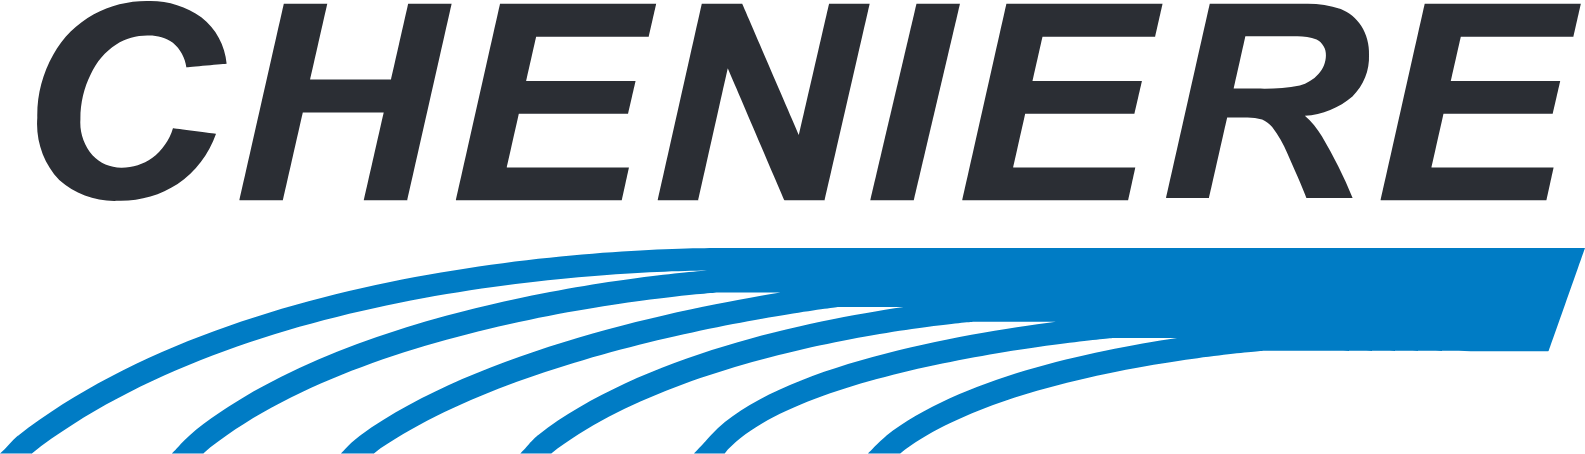 Cheniere Energy Brand Logo